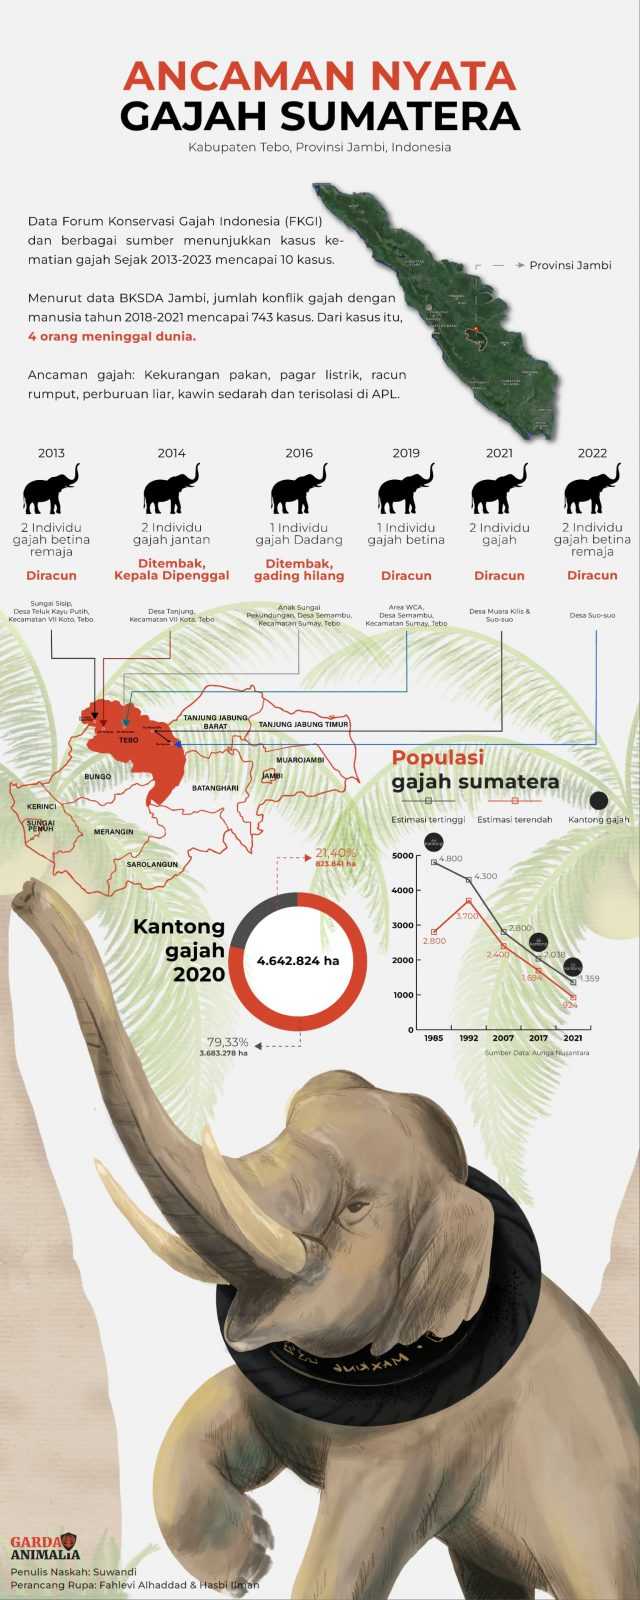 Infografis ancaman gajah sumatra di Kabupaten Tebo, Provinsi Jambi. Diterbitkan dalam liputan investigatif Penjara Gajah di Tepi Kebun Karet Ban Michelin. | Infografis: Suwandi, Fahlevi Alhaddah, Hasbi Ilman